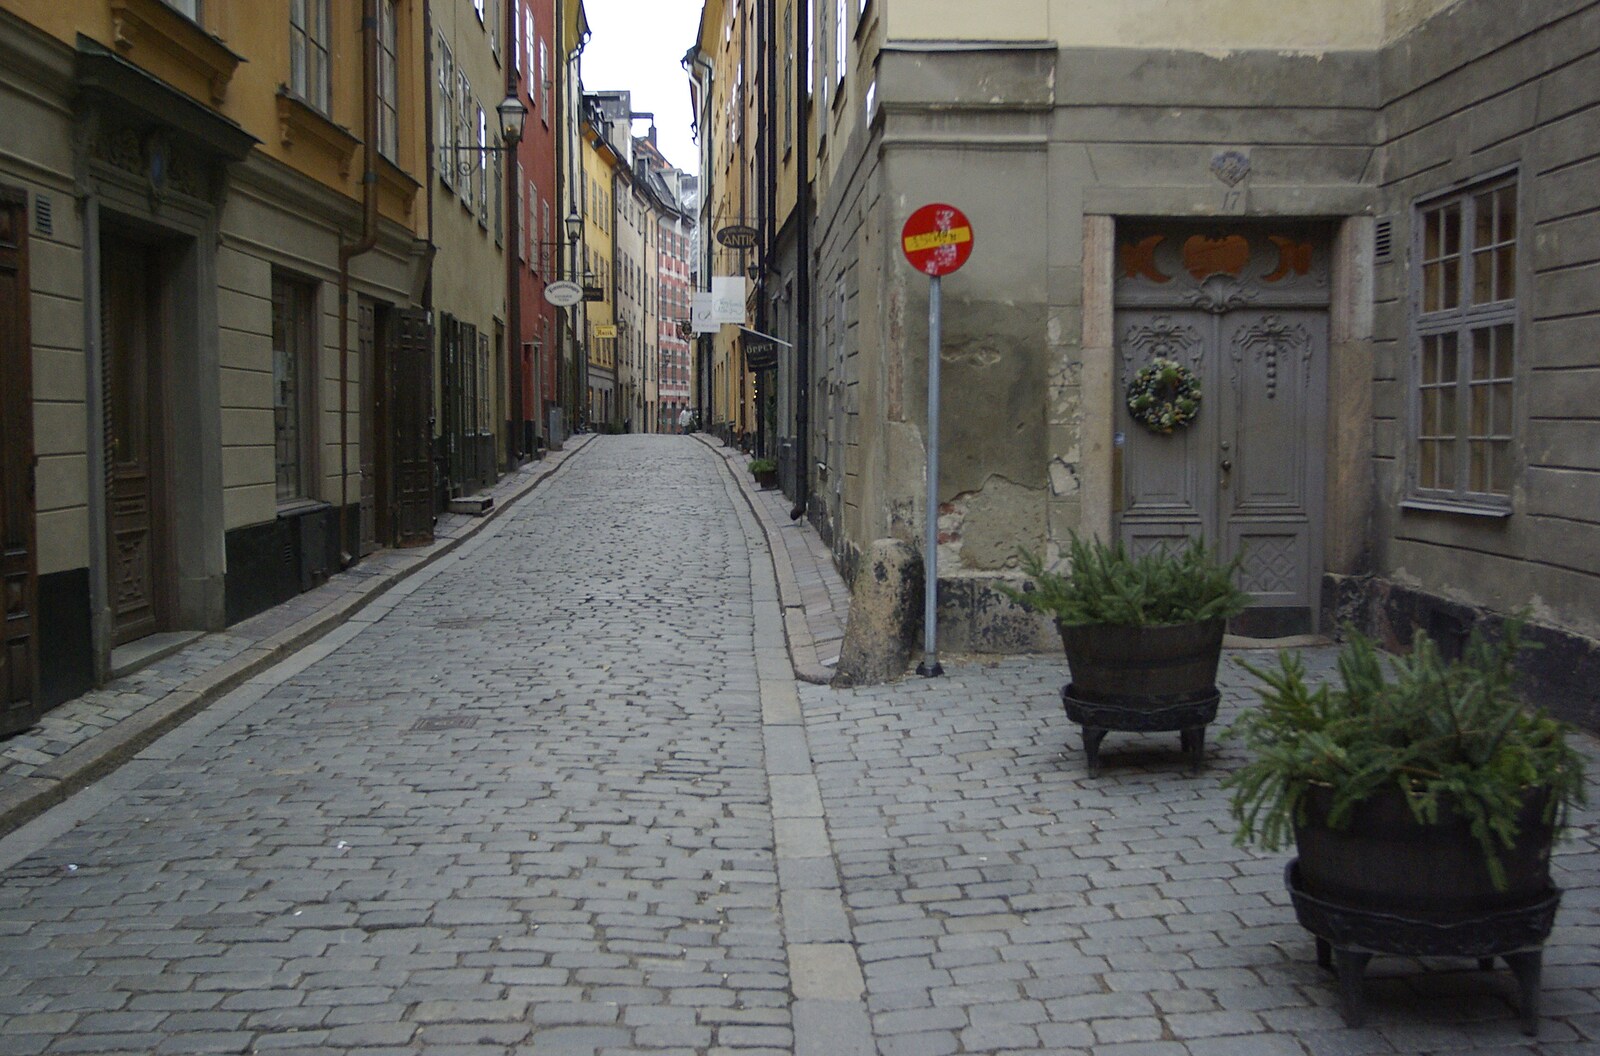 Nicely cobbled lane from Gamla Stan, Stockholm, Sweden - 15th December 2007